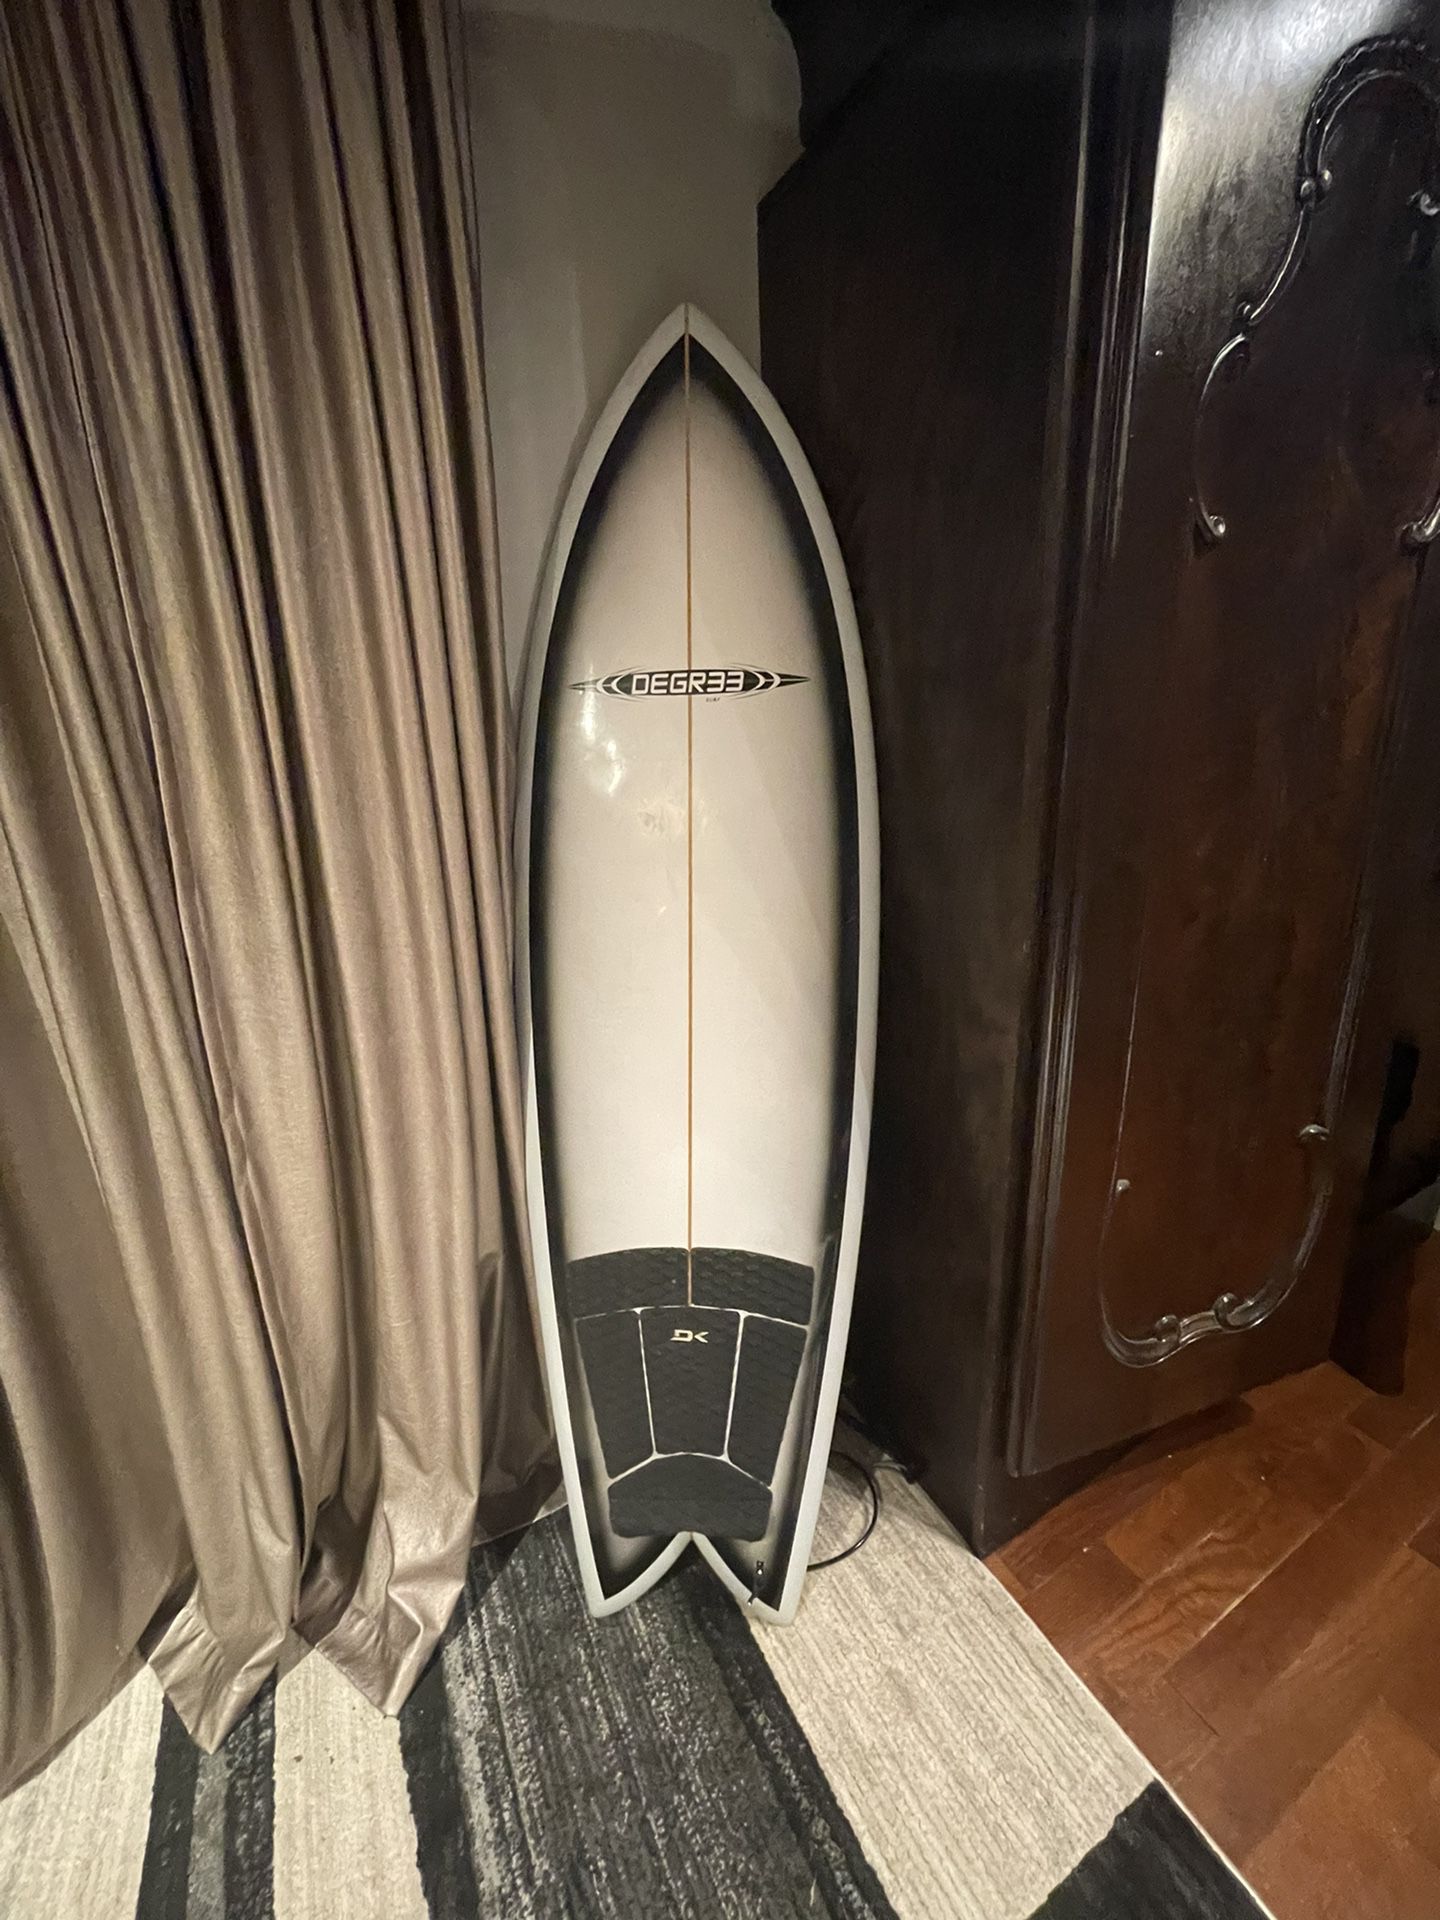 new surfboard 6’2”